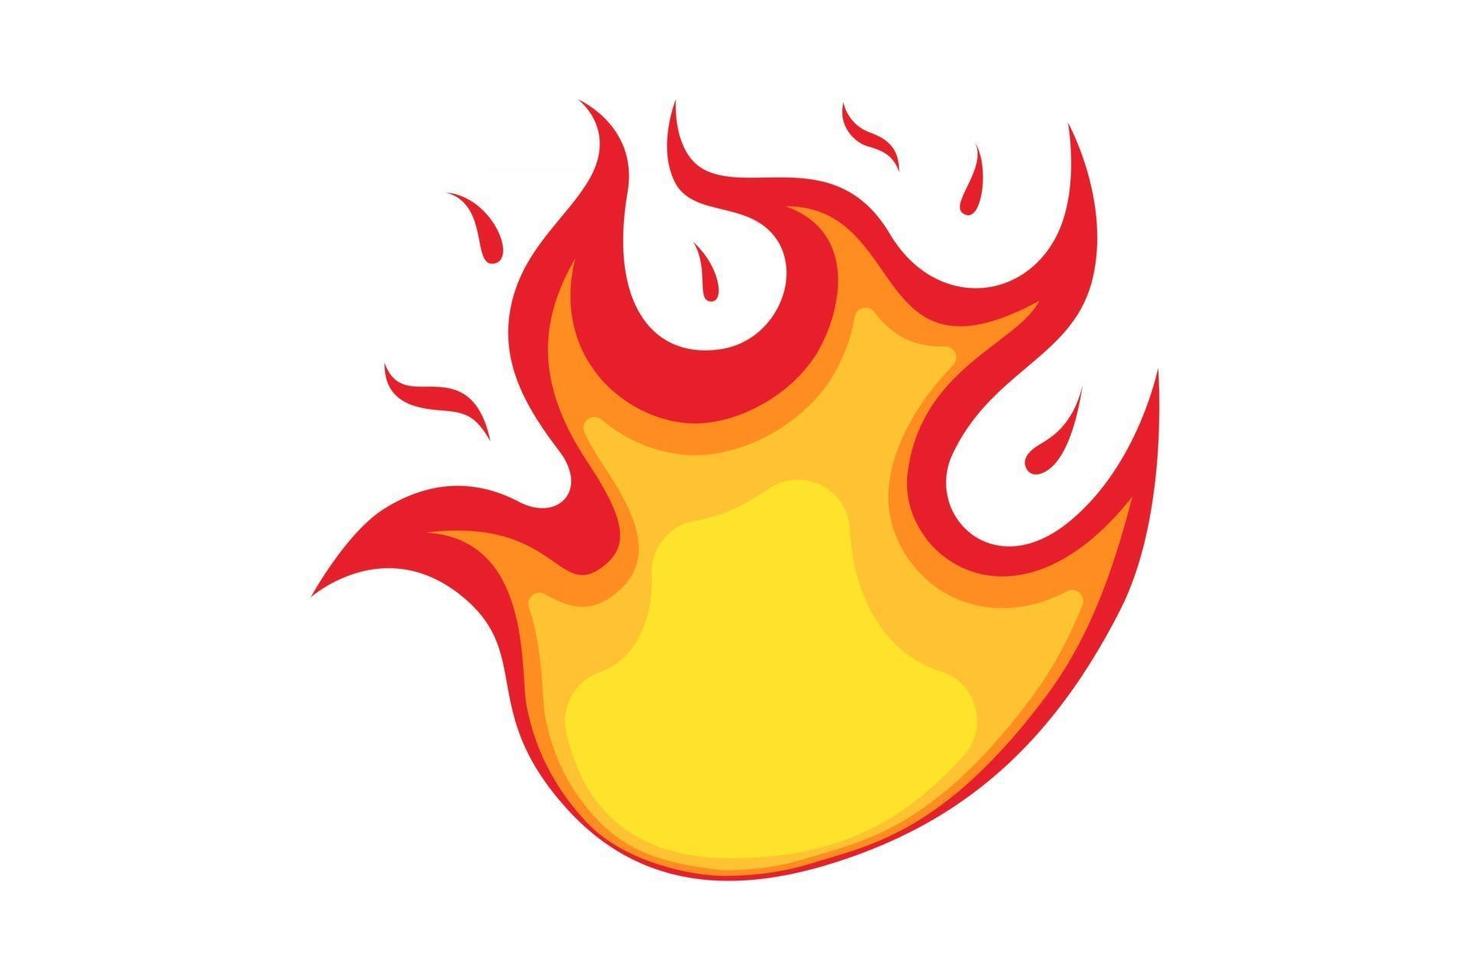 Fire flame emoji icon. Isolated bonfire sign emoticon symbol on white background. Vector burn illustration